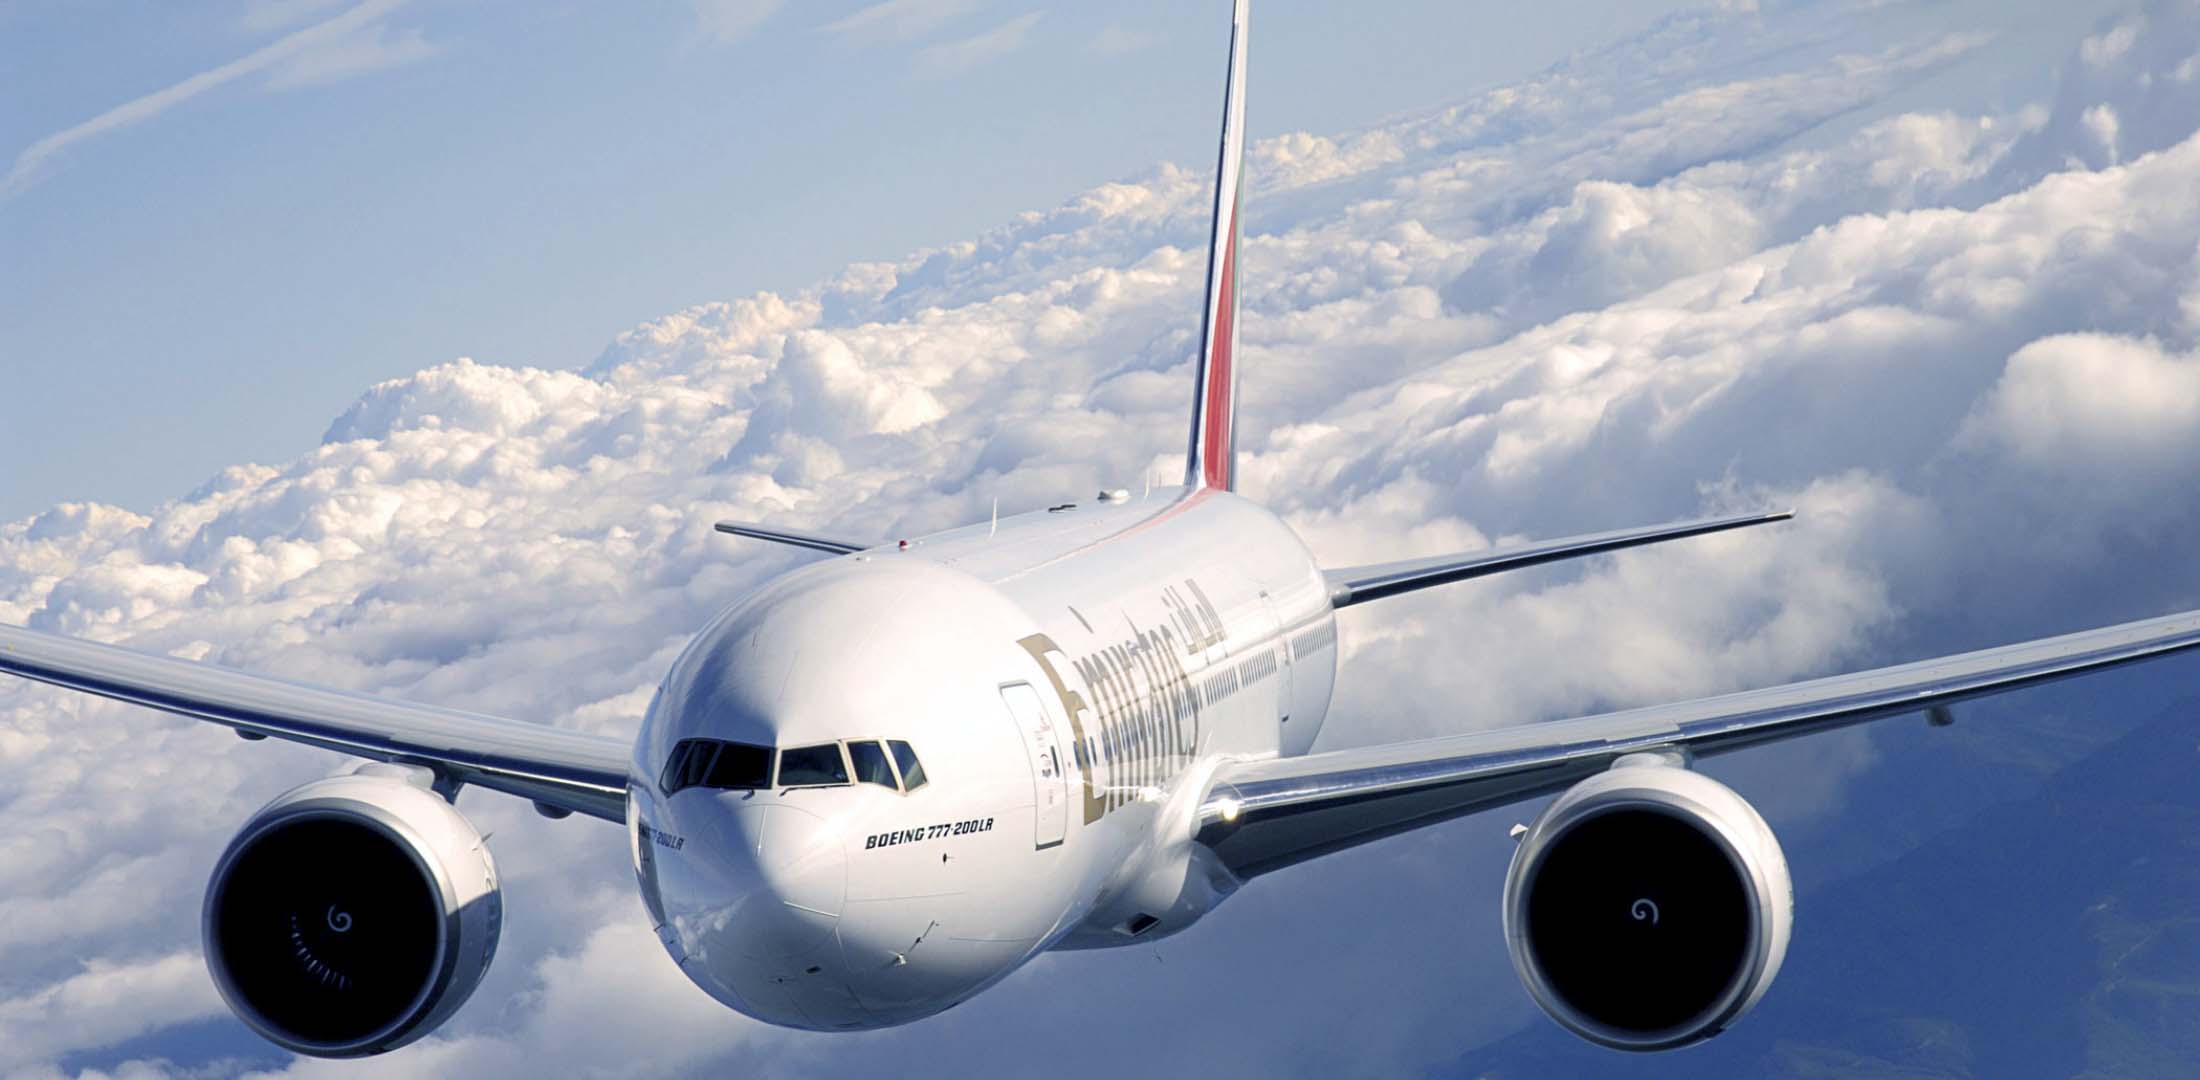 Emirates-777-200LR.jpg